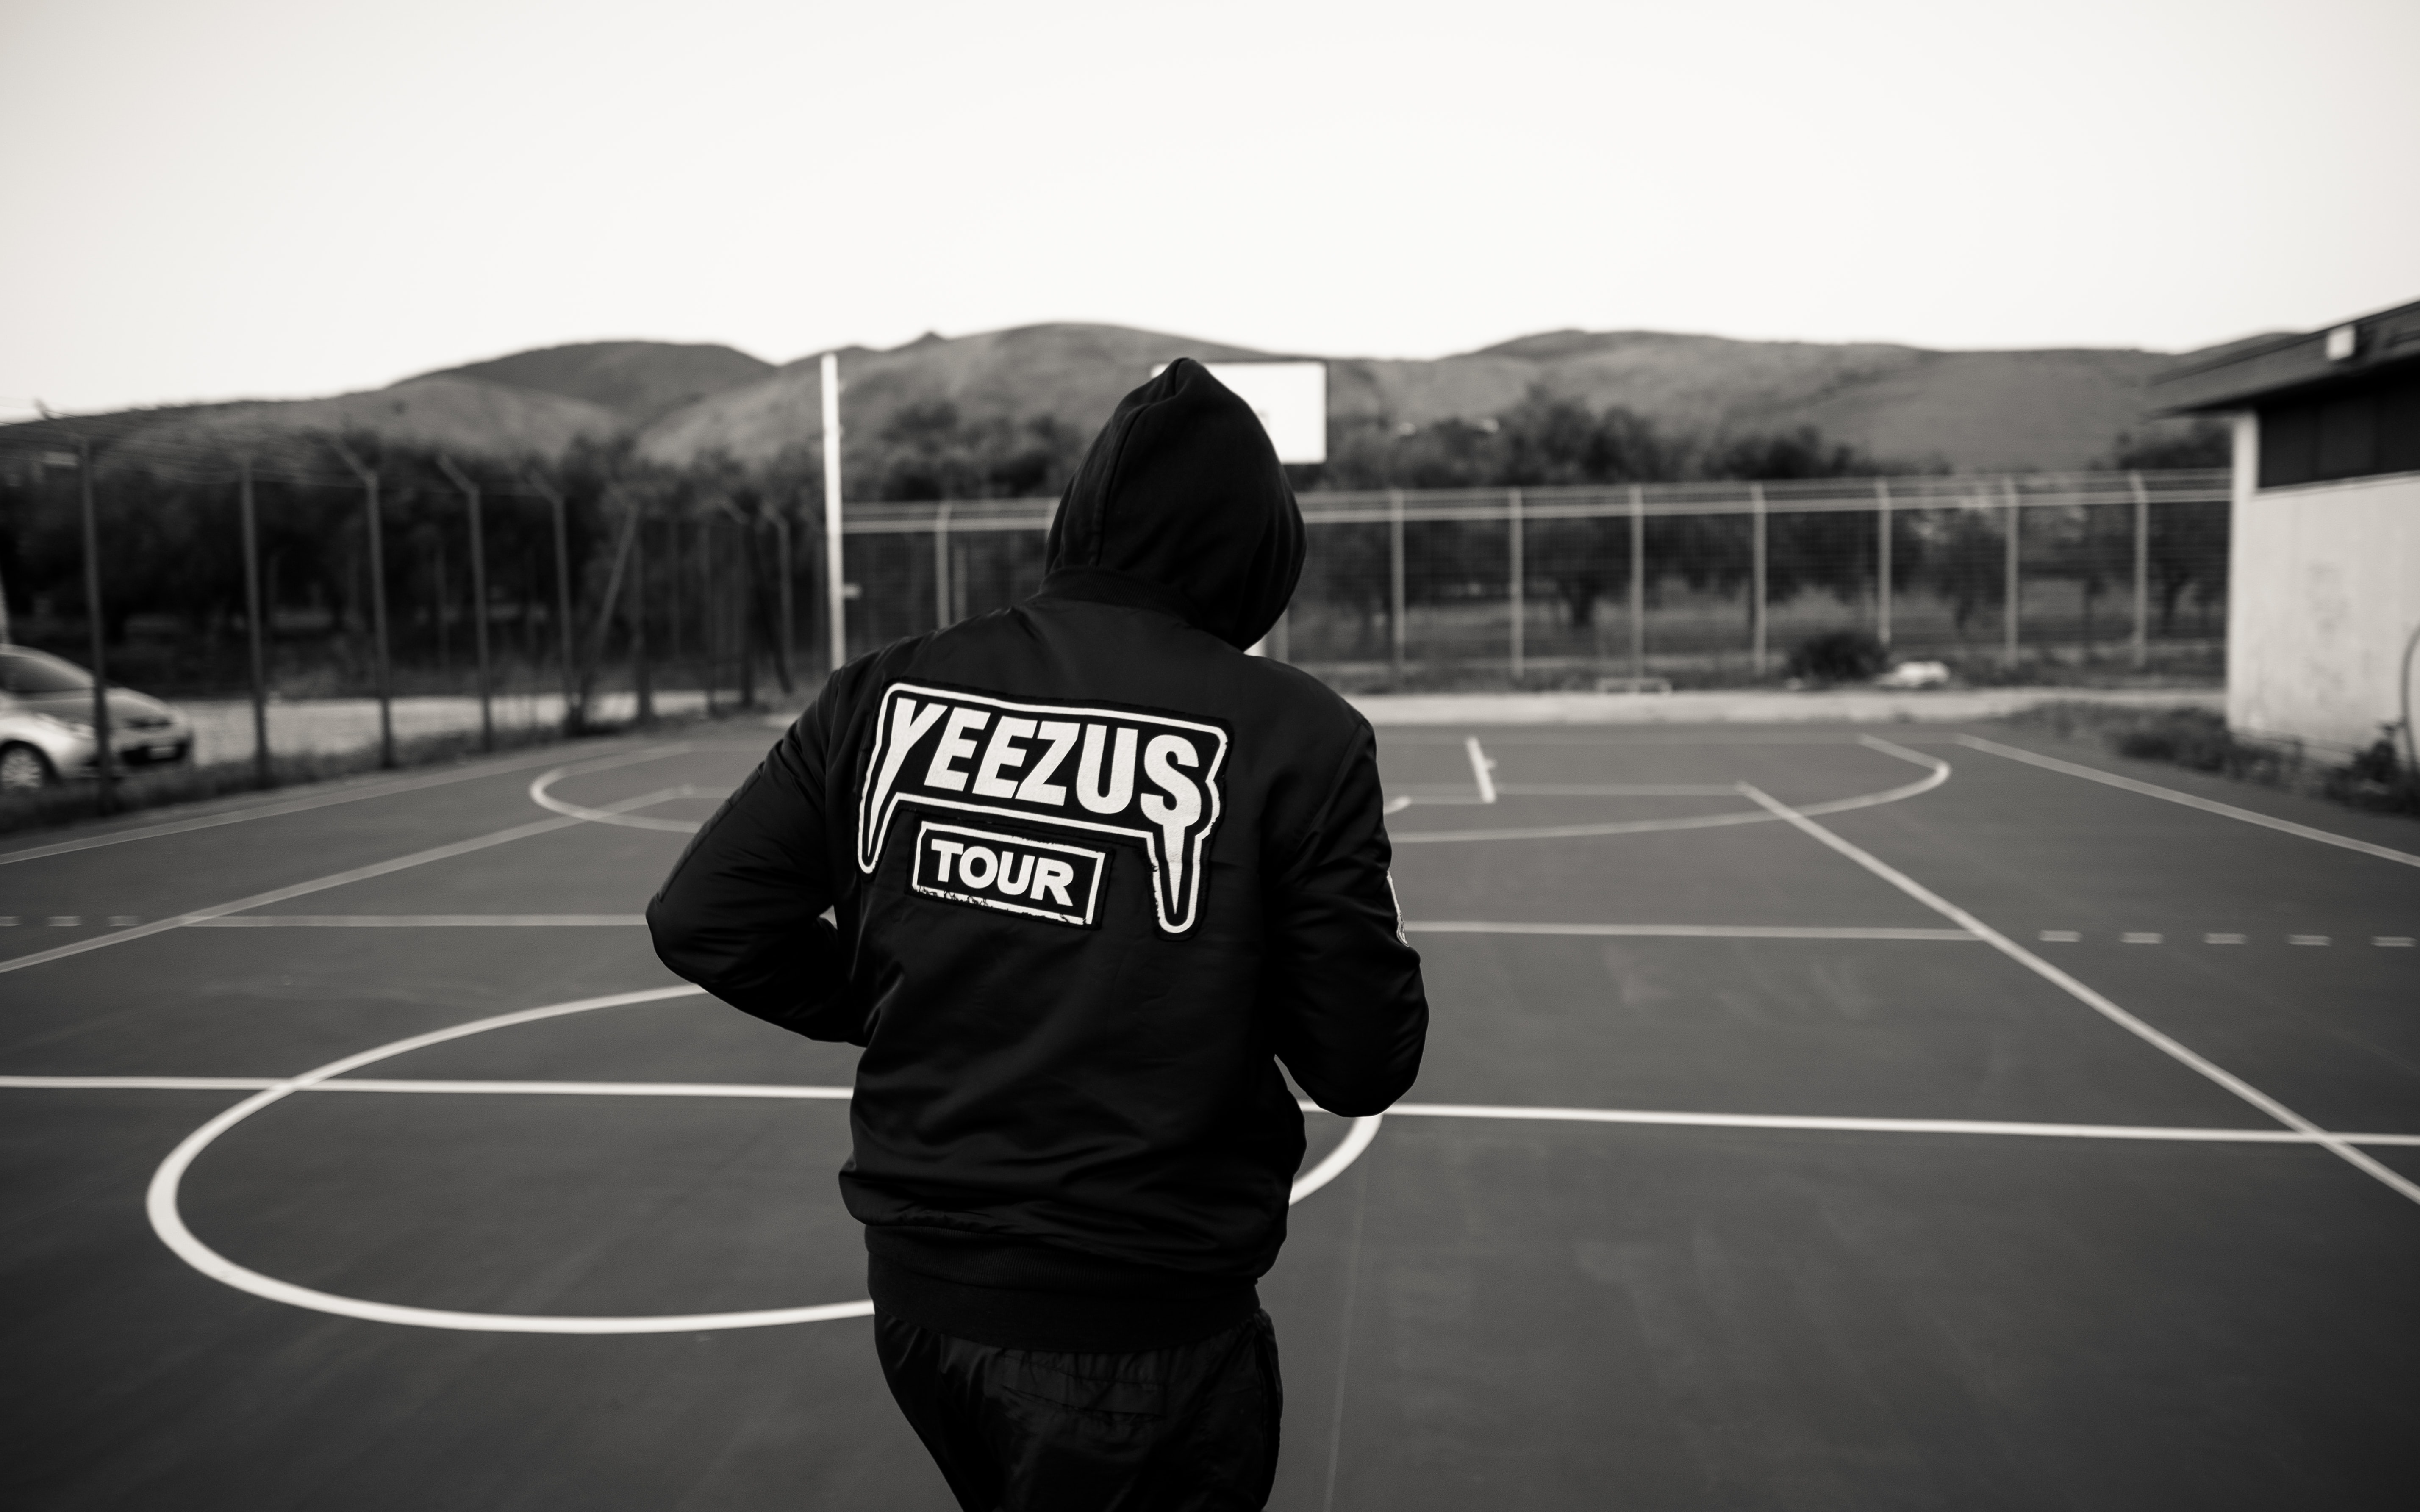 Man in black and white Yeezus Tour hoodie; image by Vittorio Cioffi, via Unsplash.com.